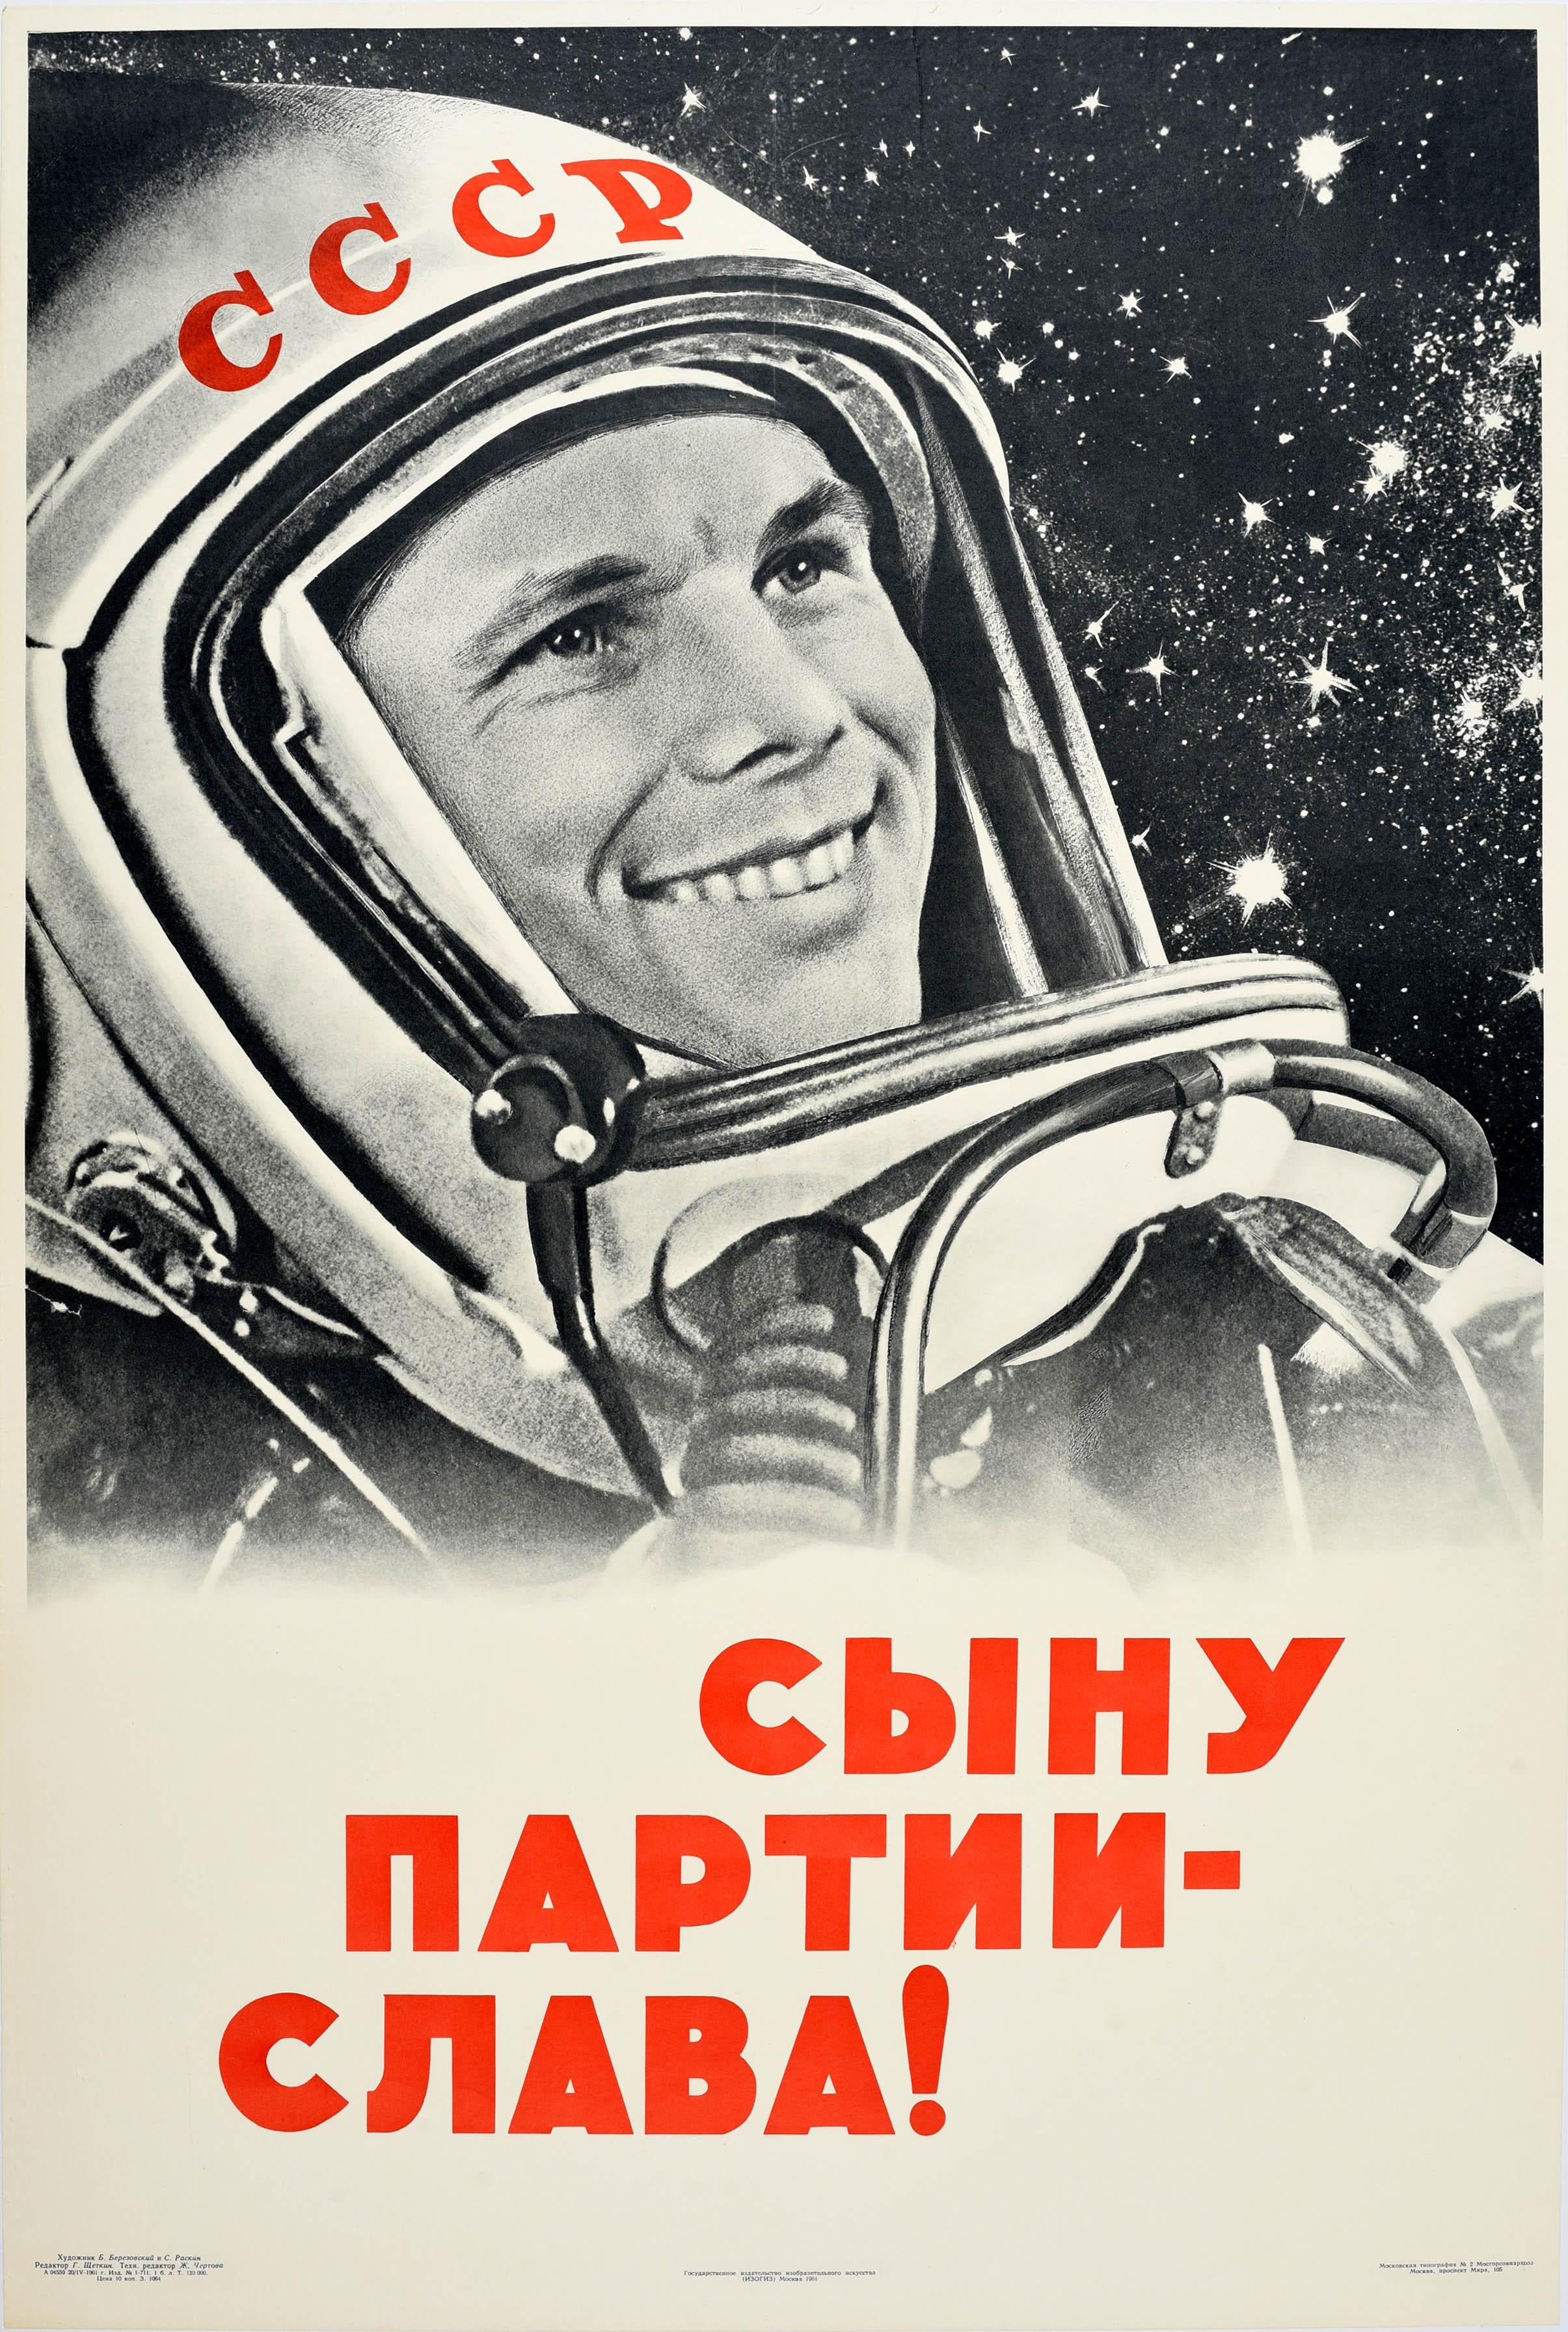 Berezovsky Print - Original Vintage Poster Yuri Gagarin Soviet Cosmonaut Communist Party Glory USSR